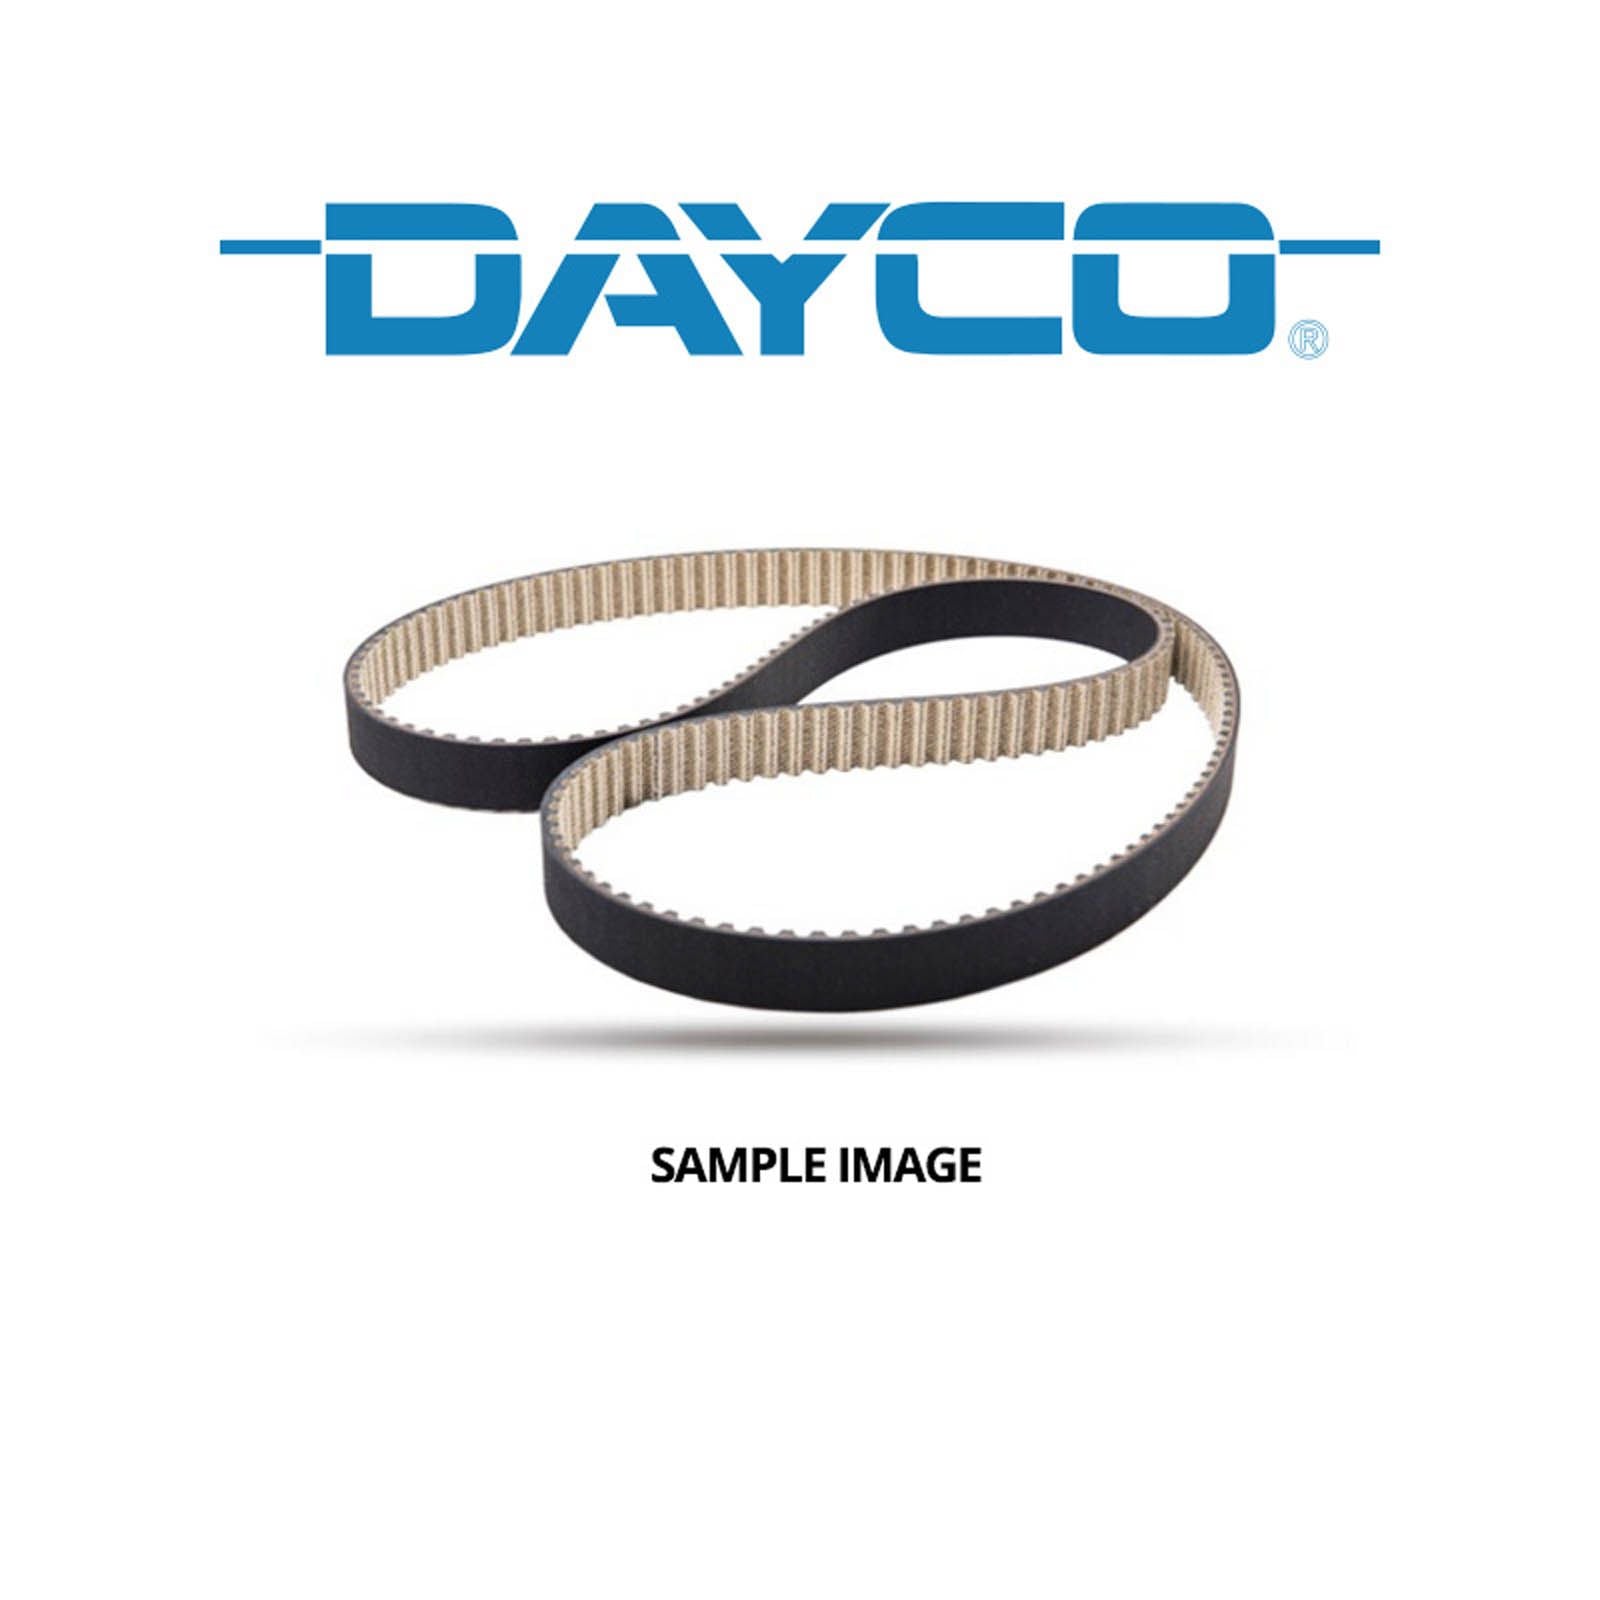 New DAYCO ATV Drive Belt HP 30.0 X 1029 HP2021 #ATVDBHP2021